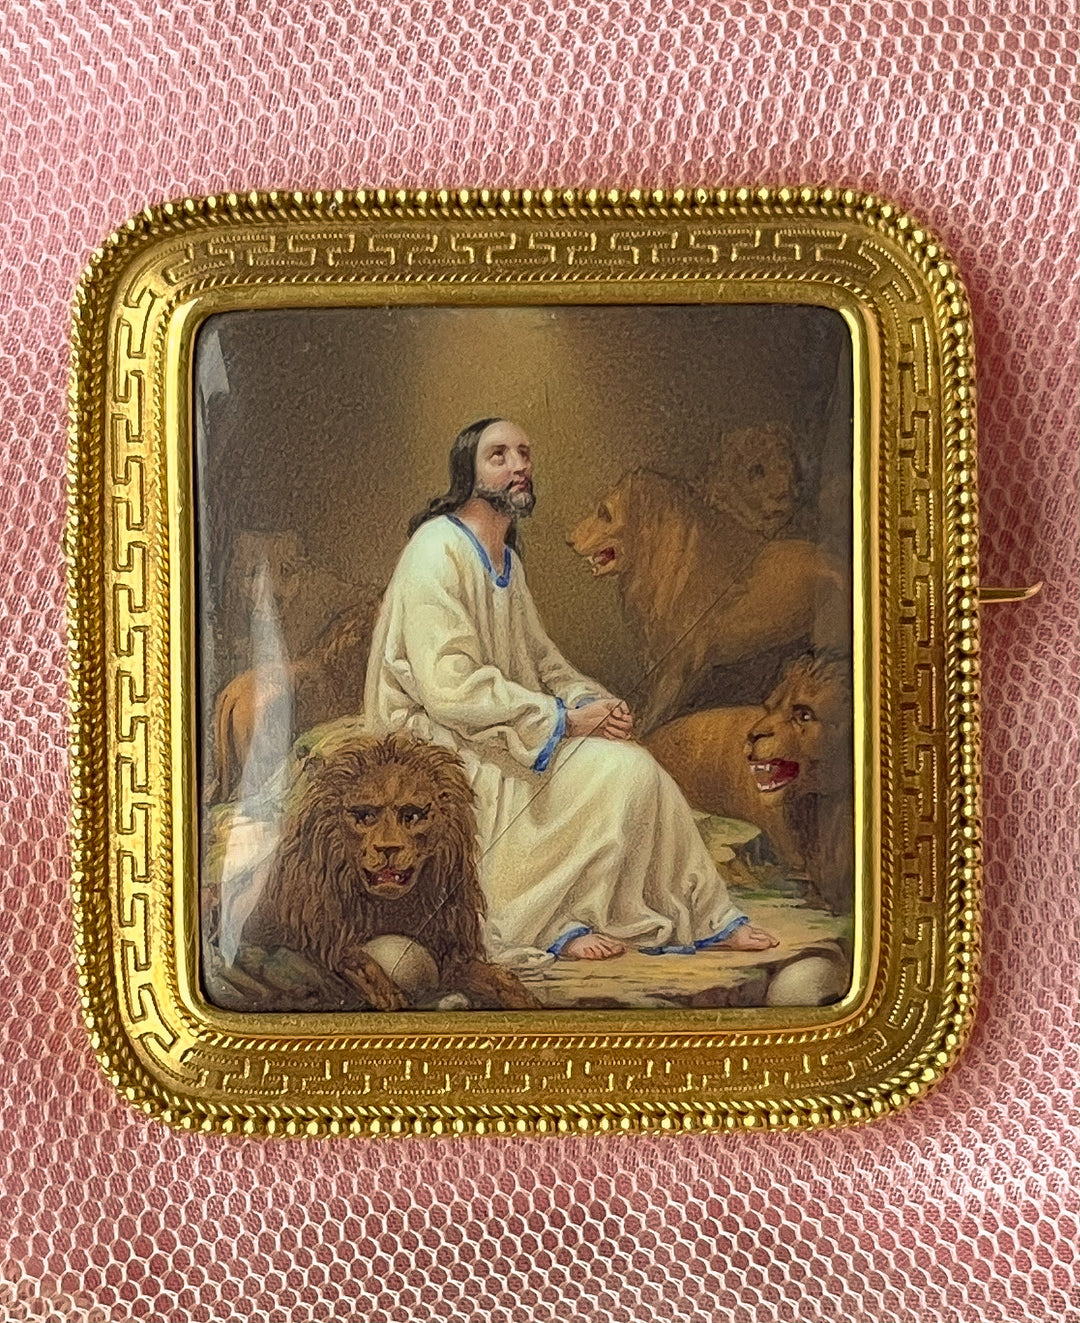 Porcelain Daniel in the Den of Lions Brooch